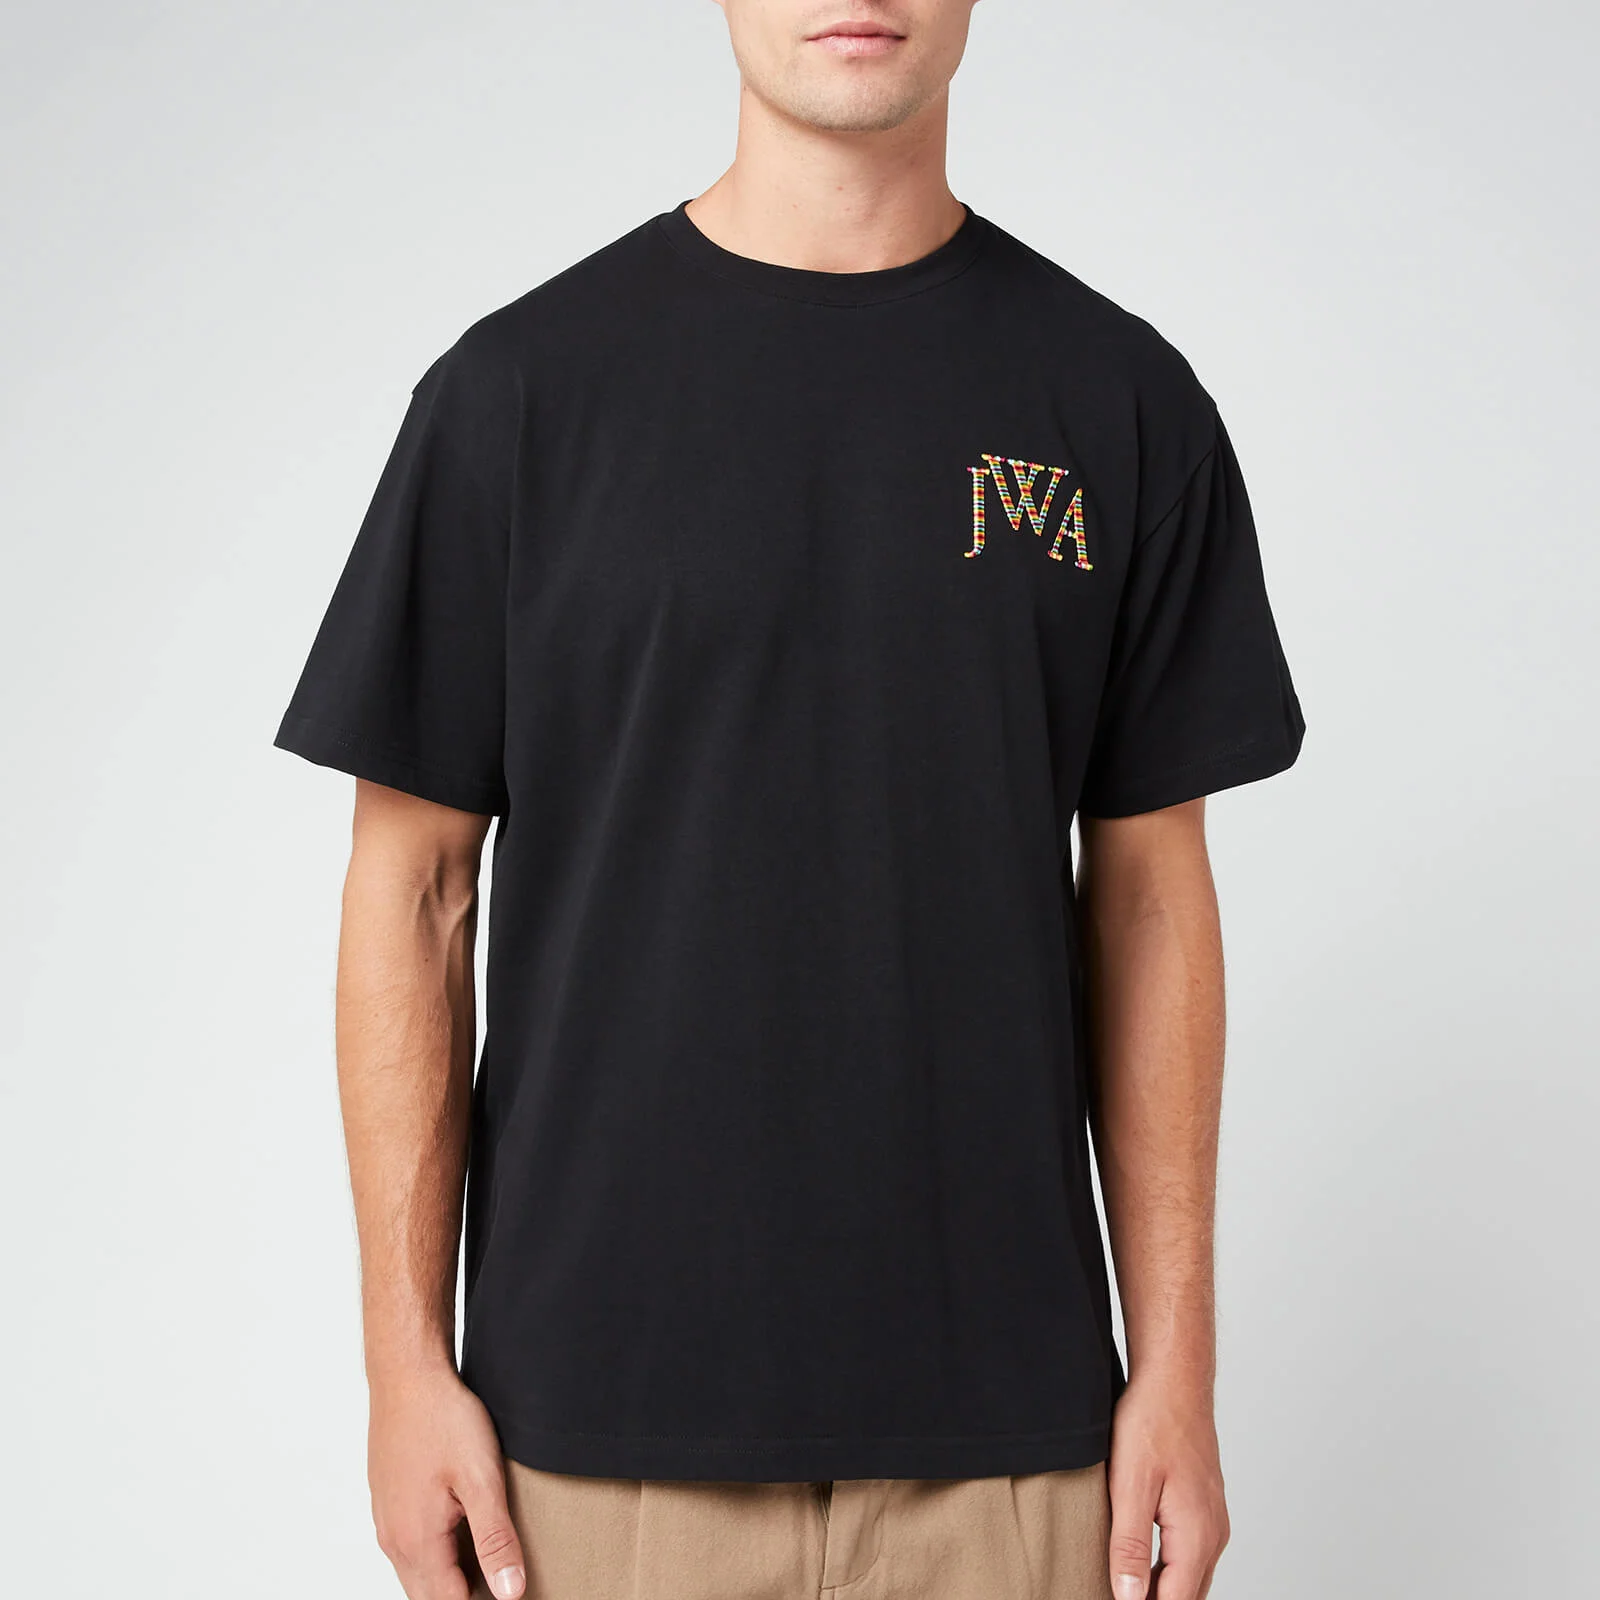 JW Anderson Men's JWA Embroidery Logo T-Shirt - Black Image 1